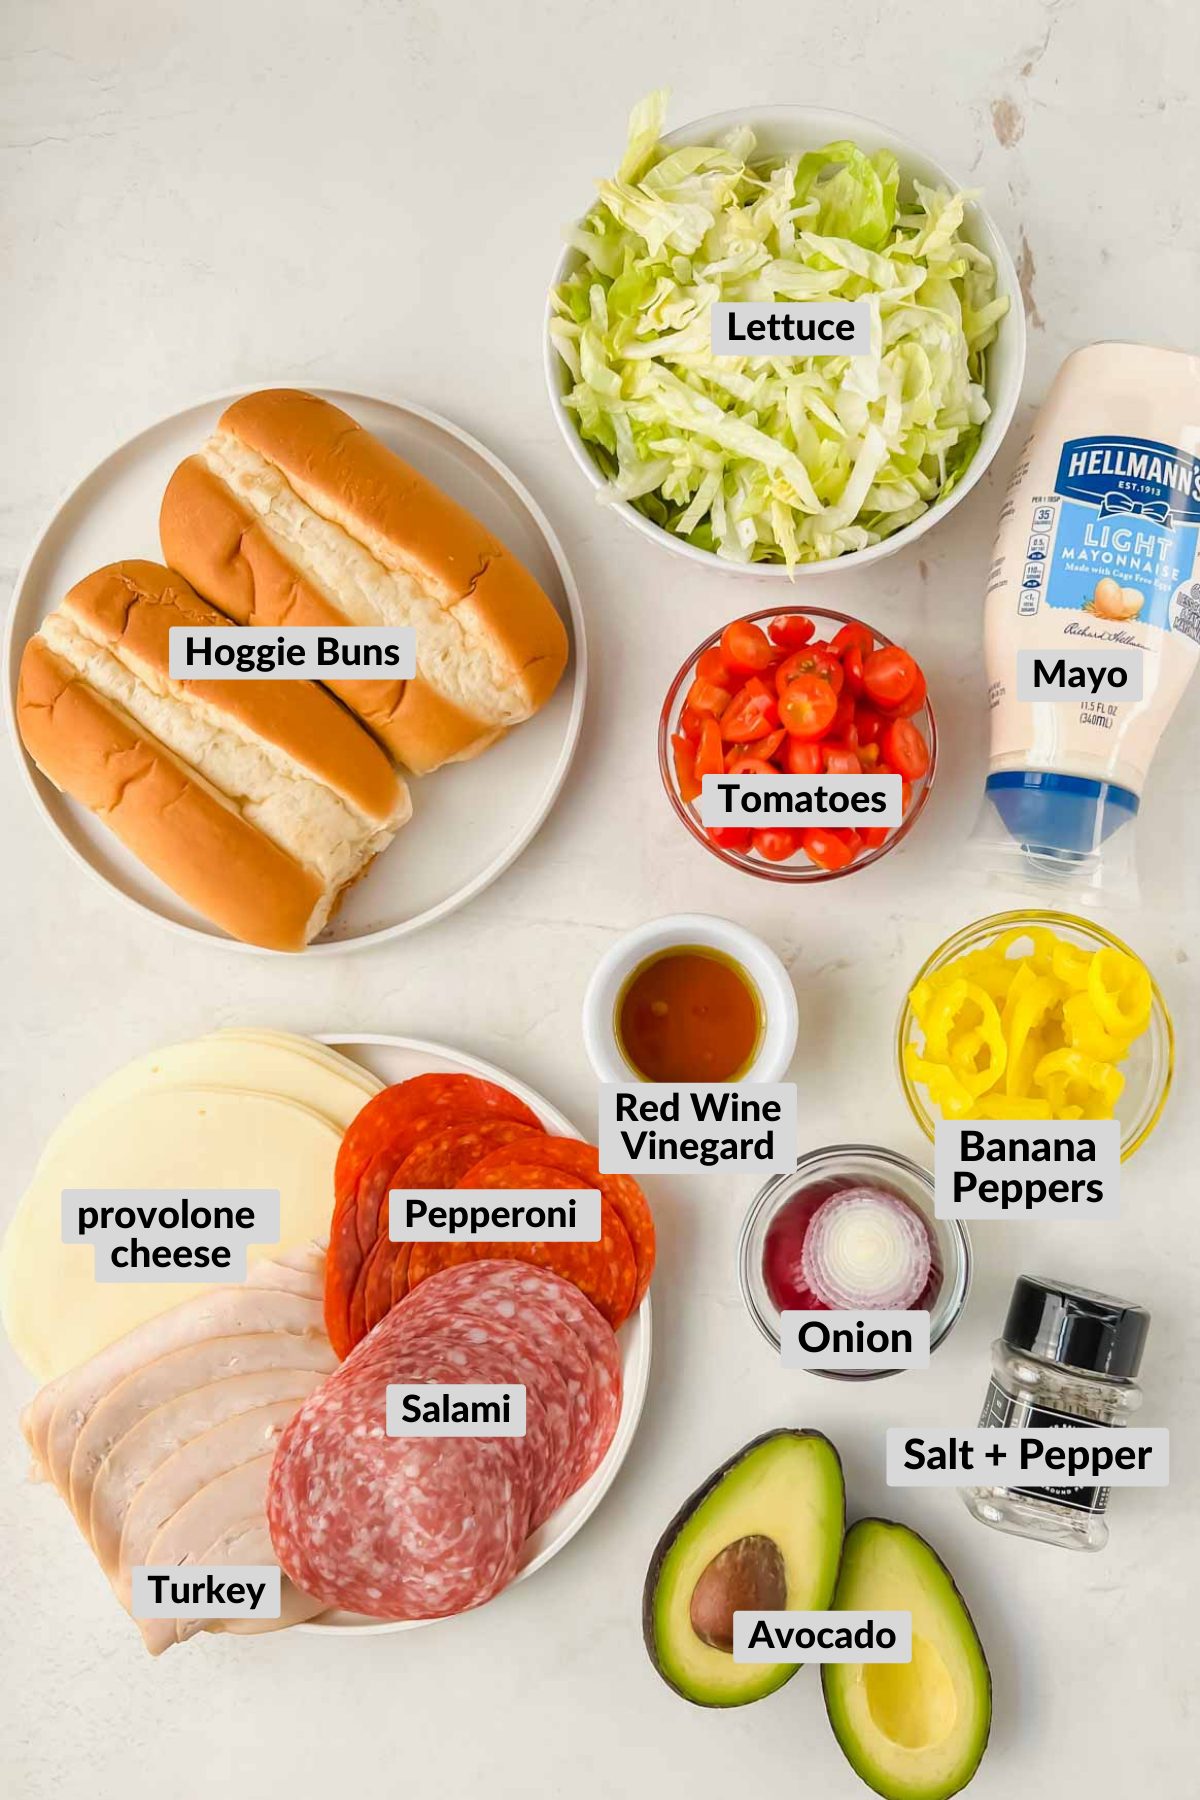 labeled grinder sandwich ingredients in individual bowls.